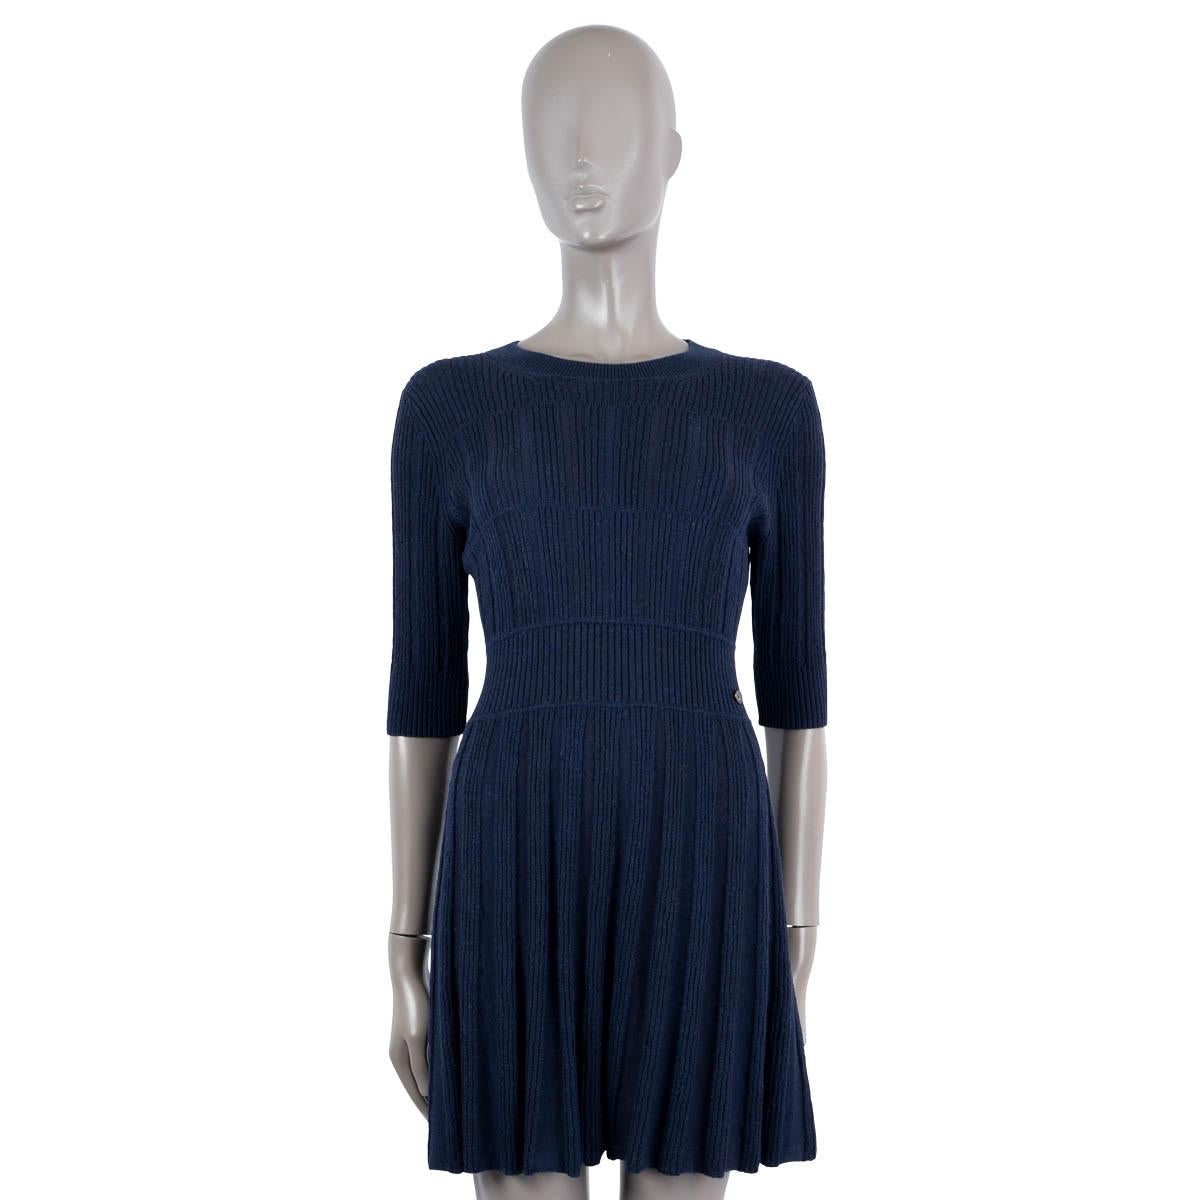 CHANEL navy blue alpaca & wool 2018 18B TEXTURED KNIT Dress 36 XS For Sale